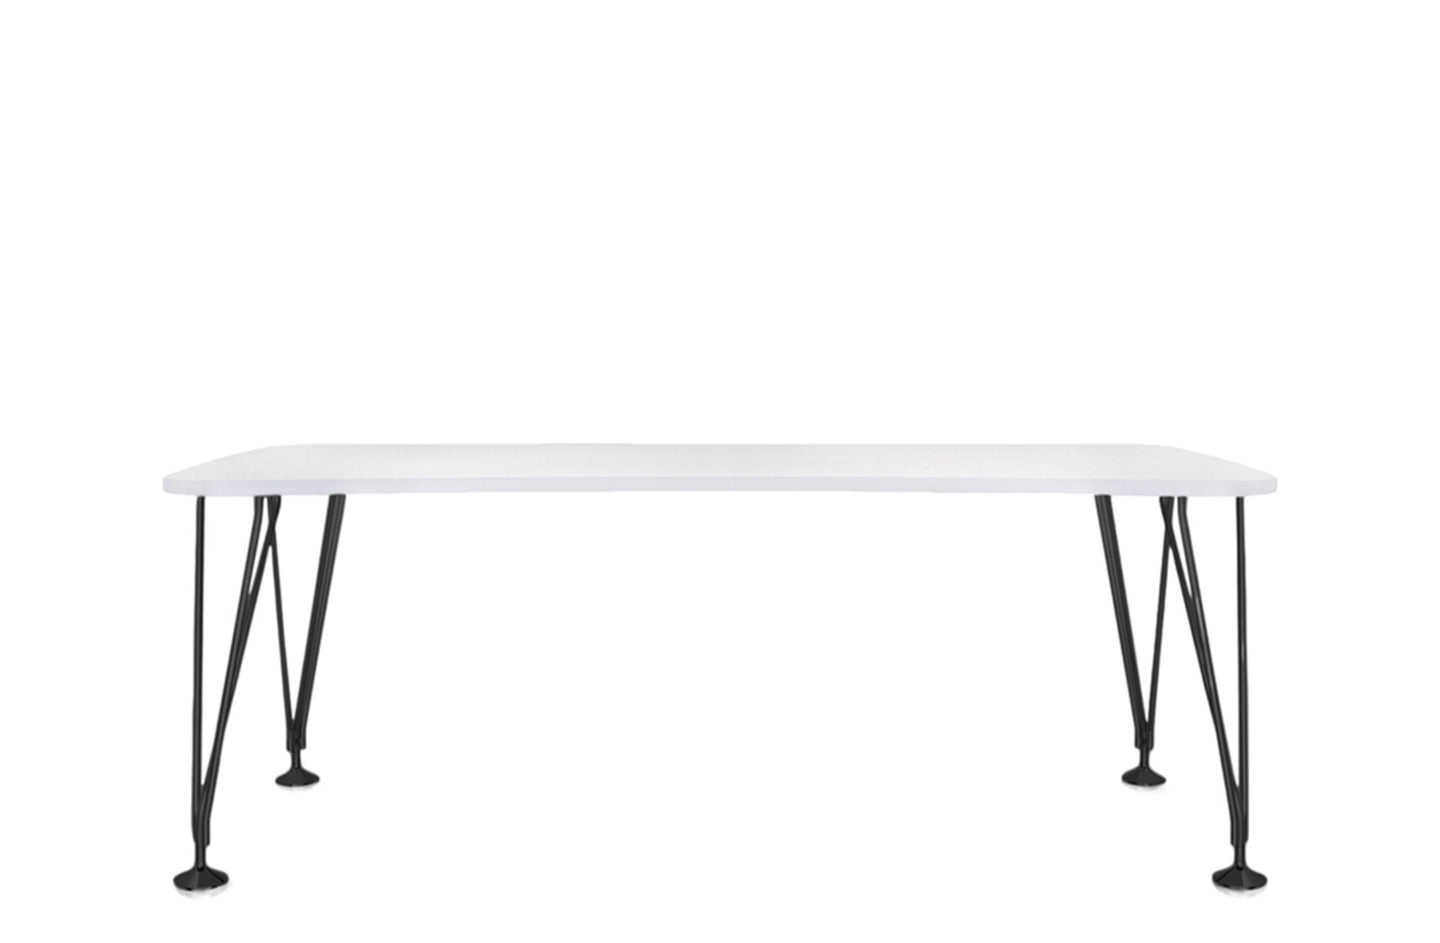 Max Medium Table
